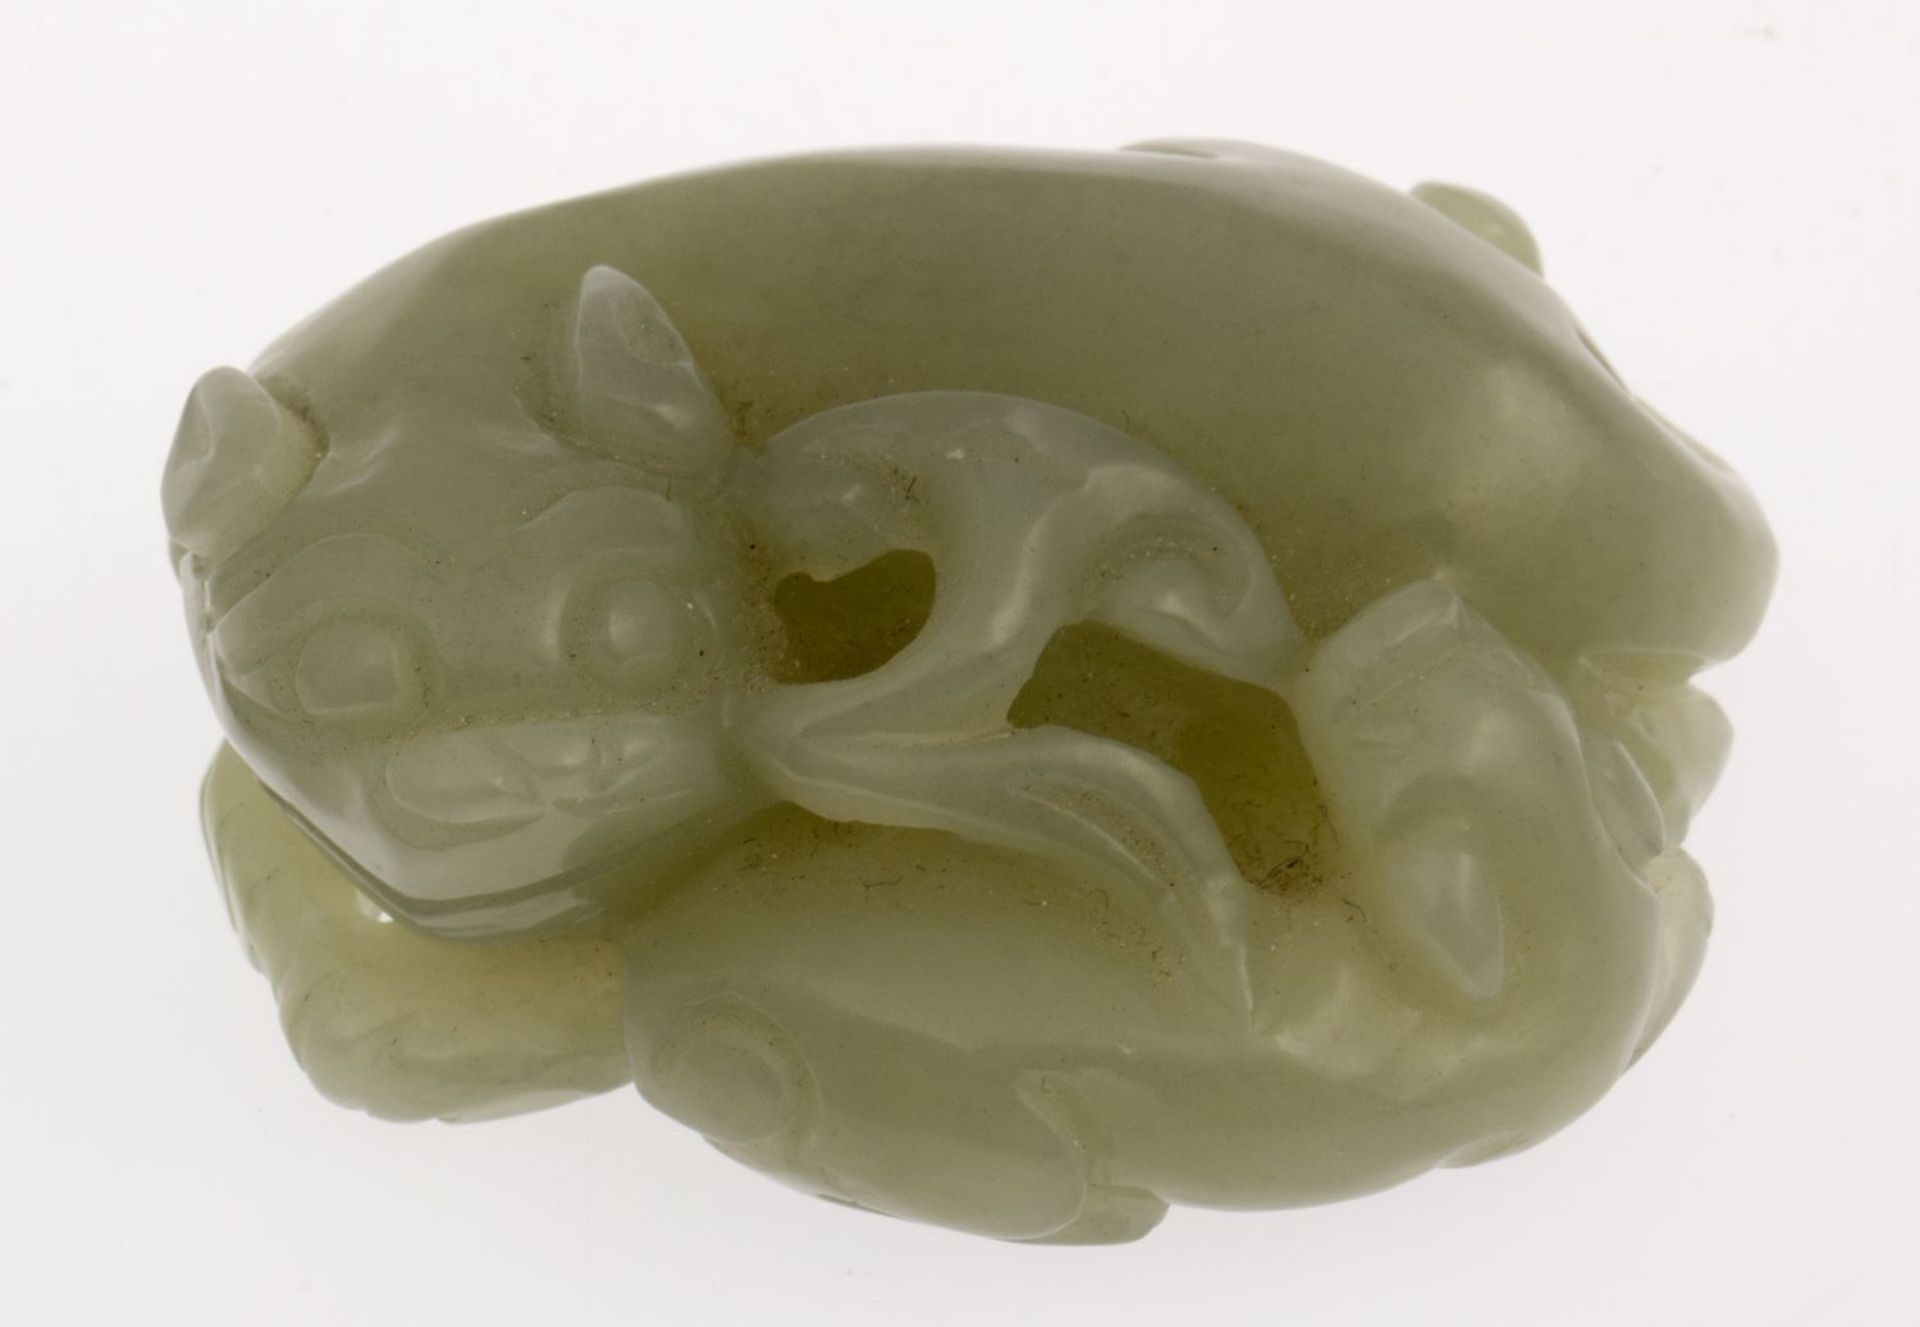 Fo-Hund mit JungemWohl hellgrüne Jade. China, wohl 19./20. Jh. L. 5 cm.- - -27.00 % buyer's